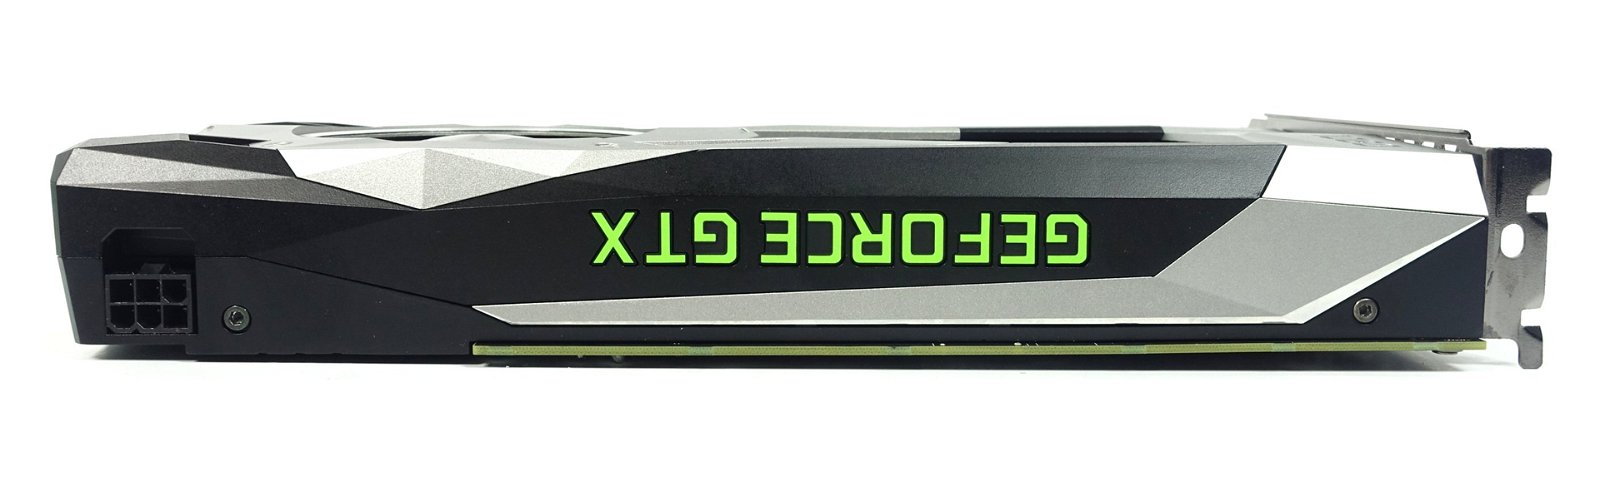 Geforce Gtx 1060 Will Outperform Gtx 980 At Only $250 1